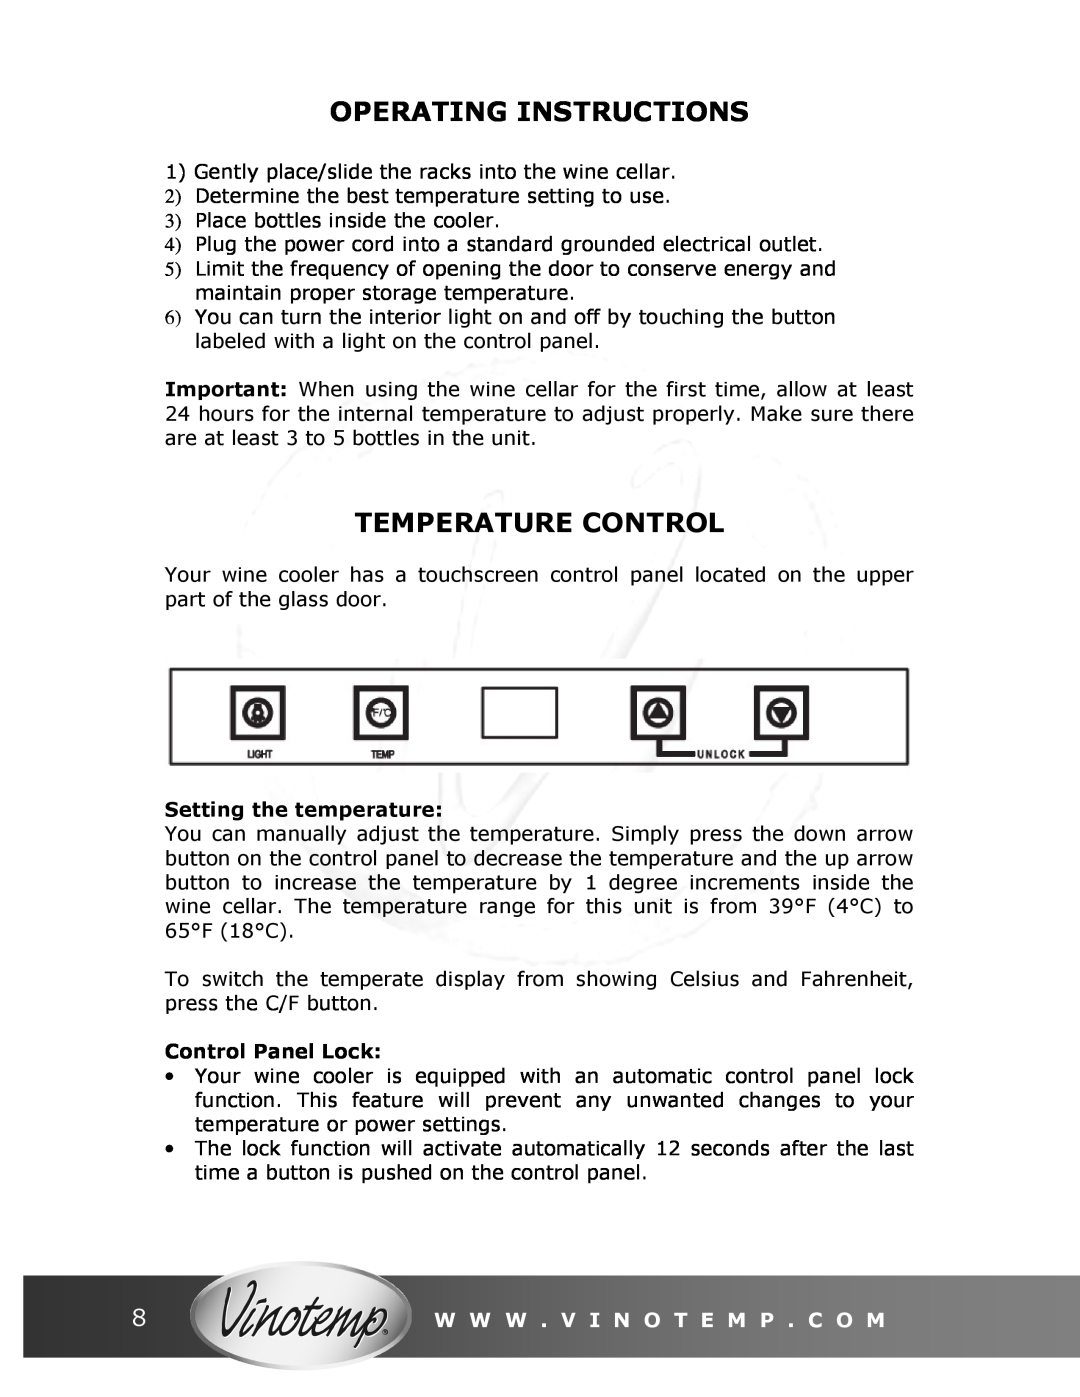 Vinotemp VT-34 TS owner manual Operating Instructions, Temperature Control, Setting the temperature, Control Panel Lock 